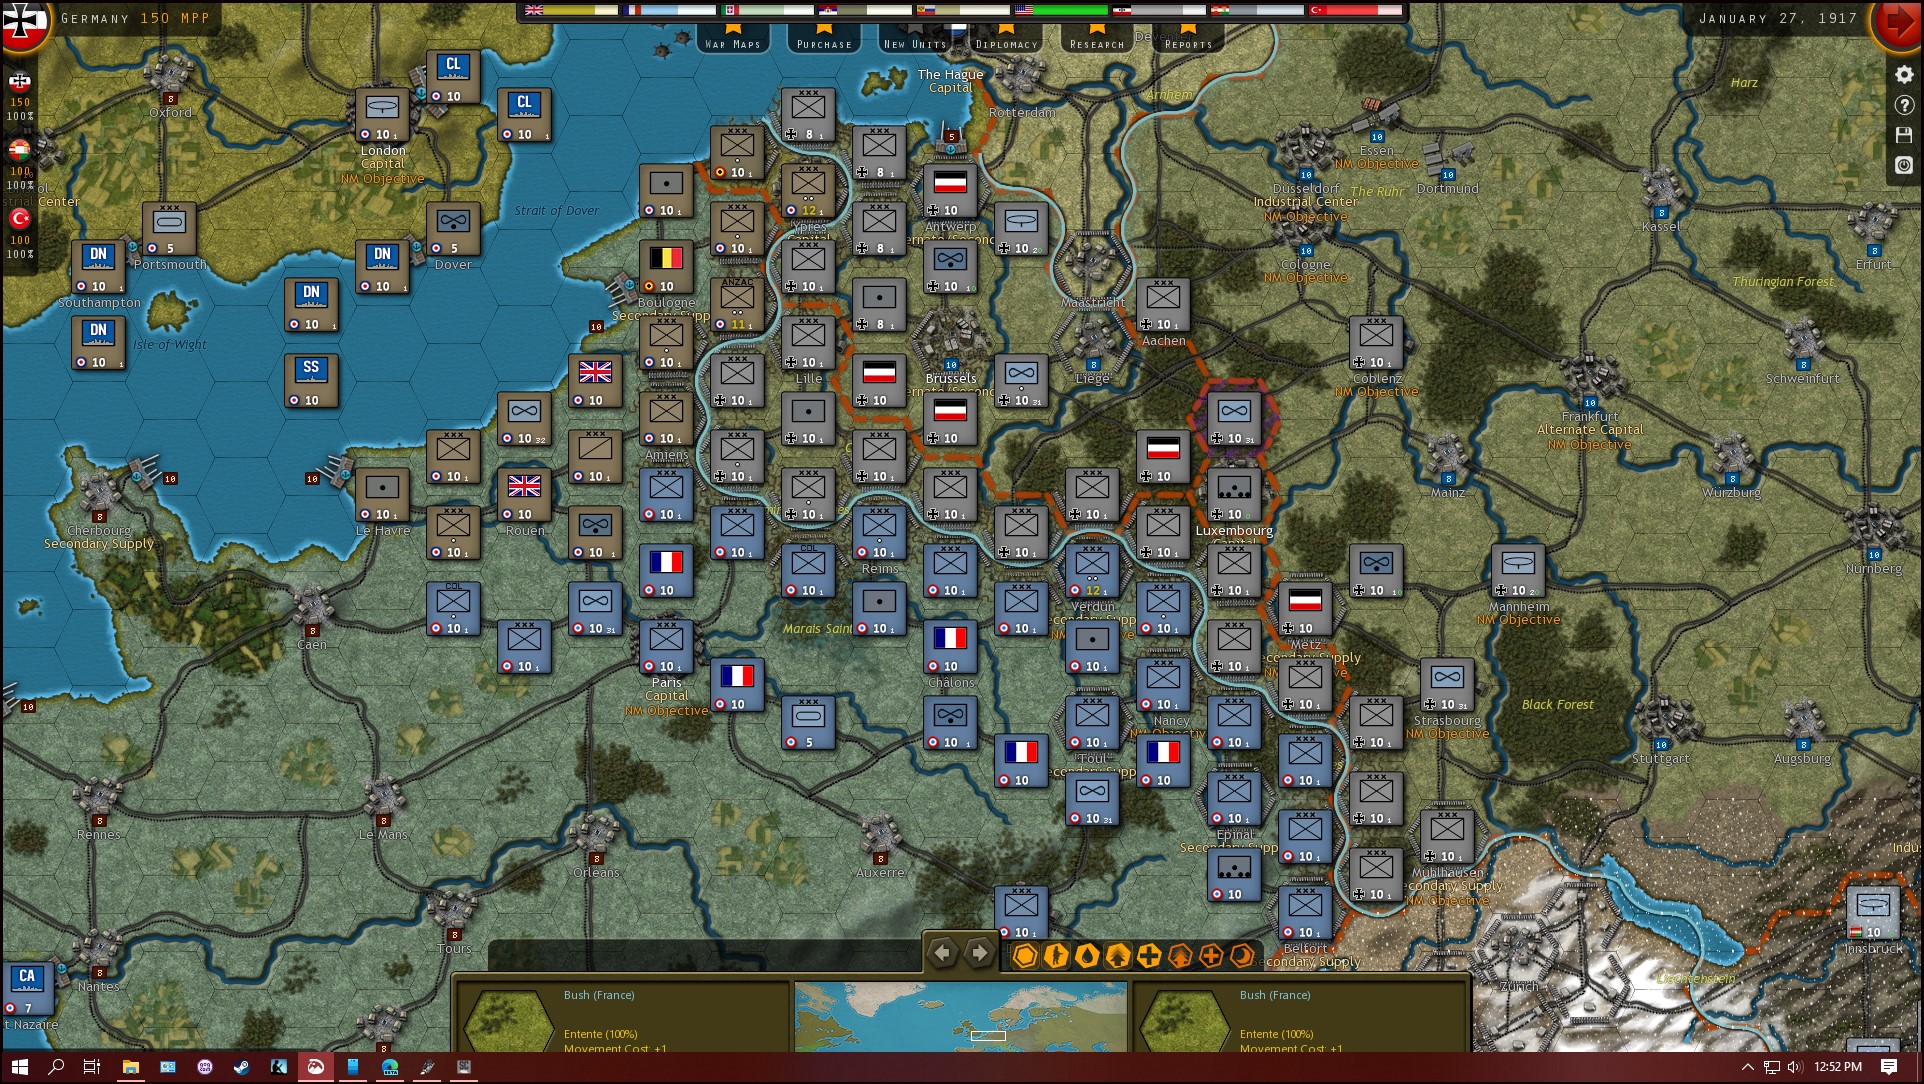 ww1 strategy games strategic command ww1 screenshot